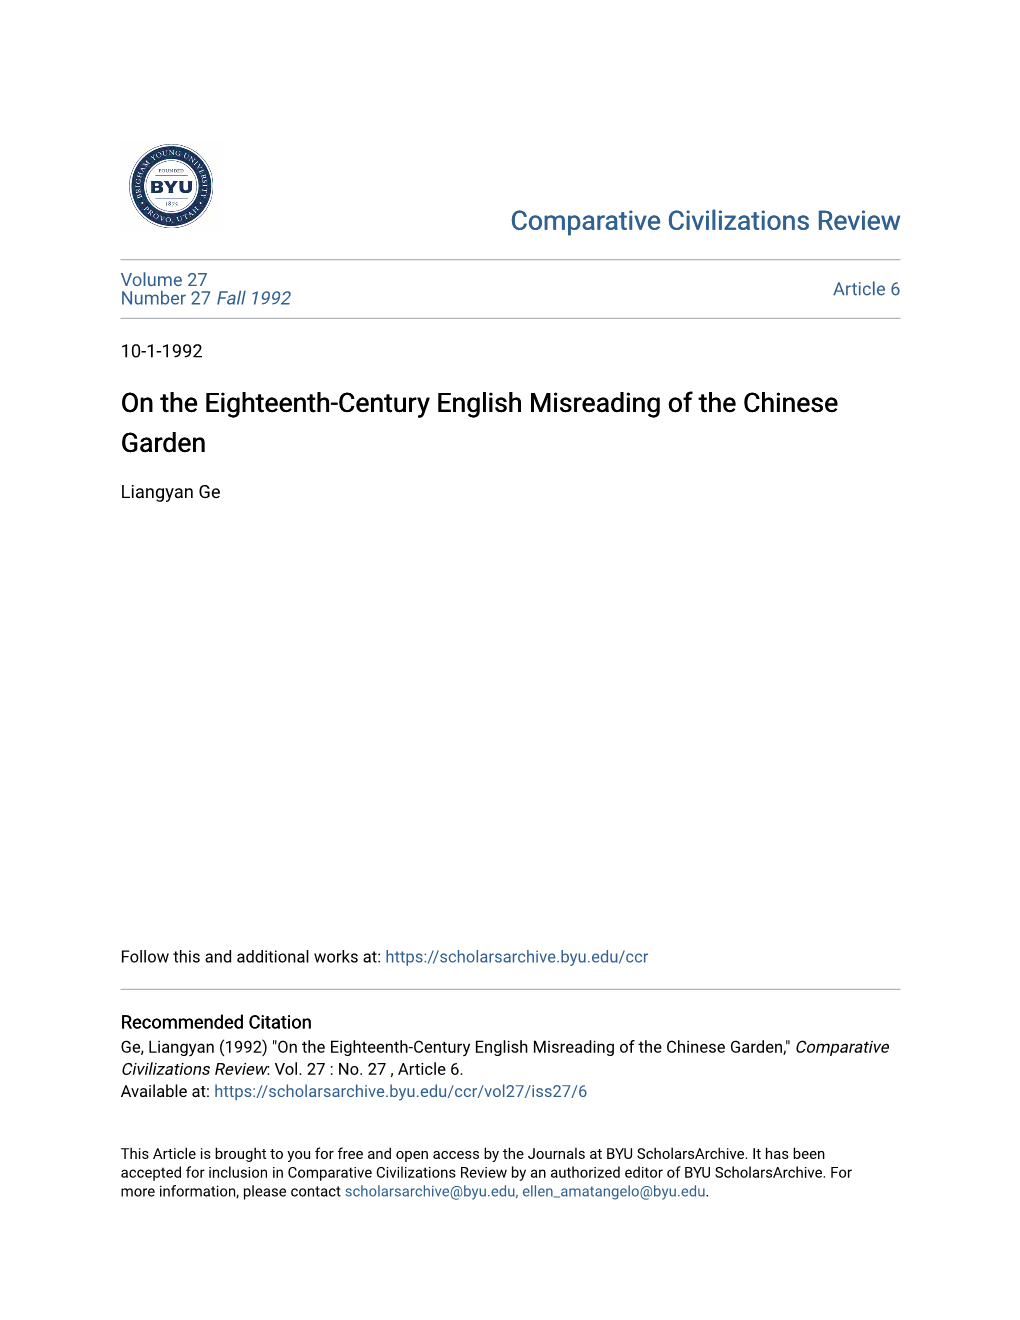 On the Eighteenth-Century English Misreading of the Chinese Garden